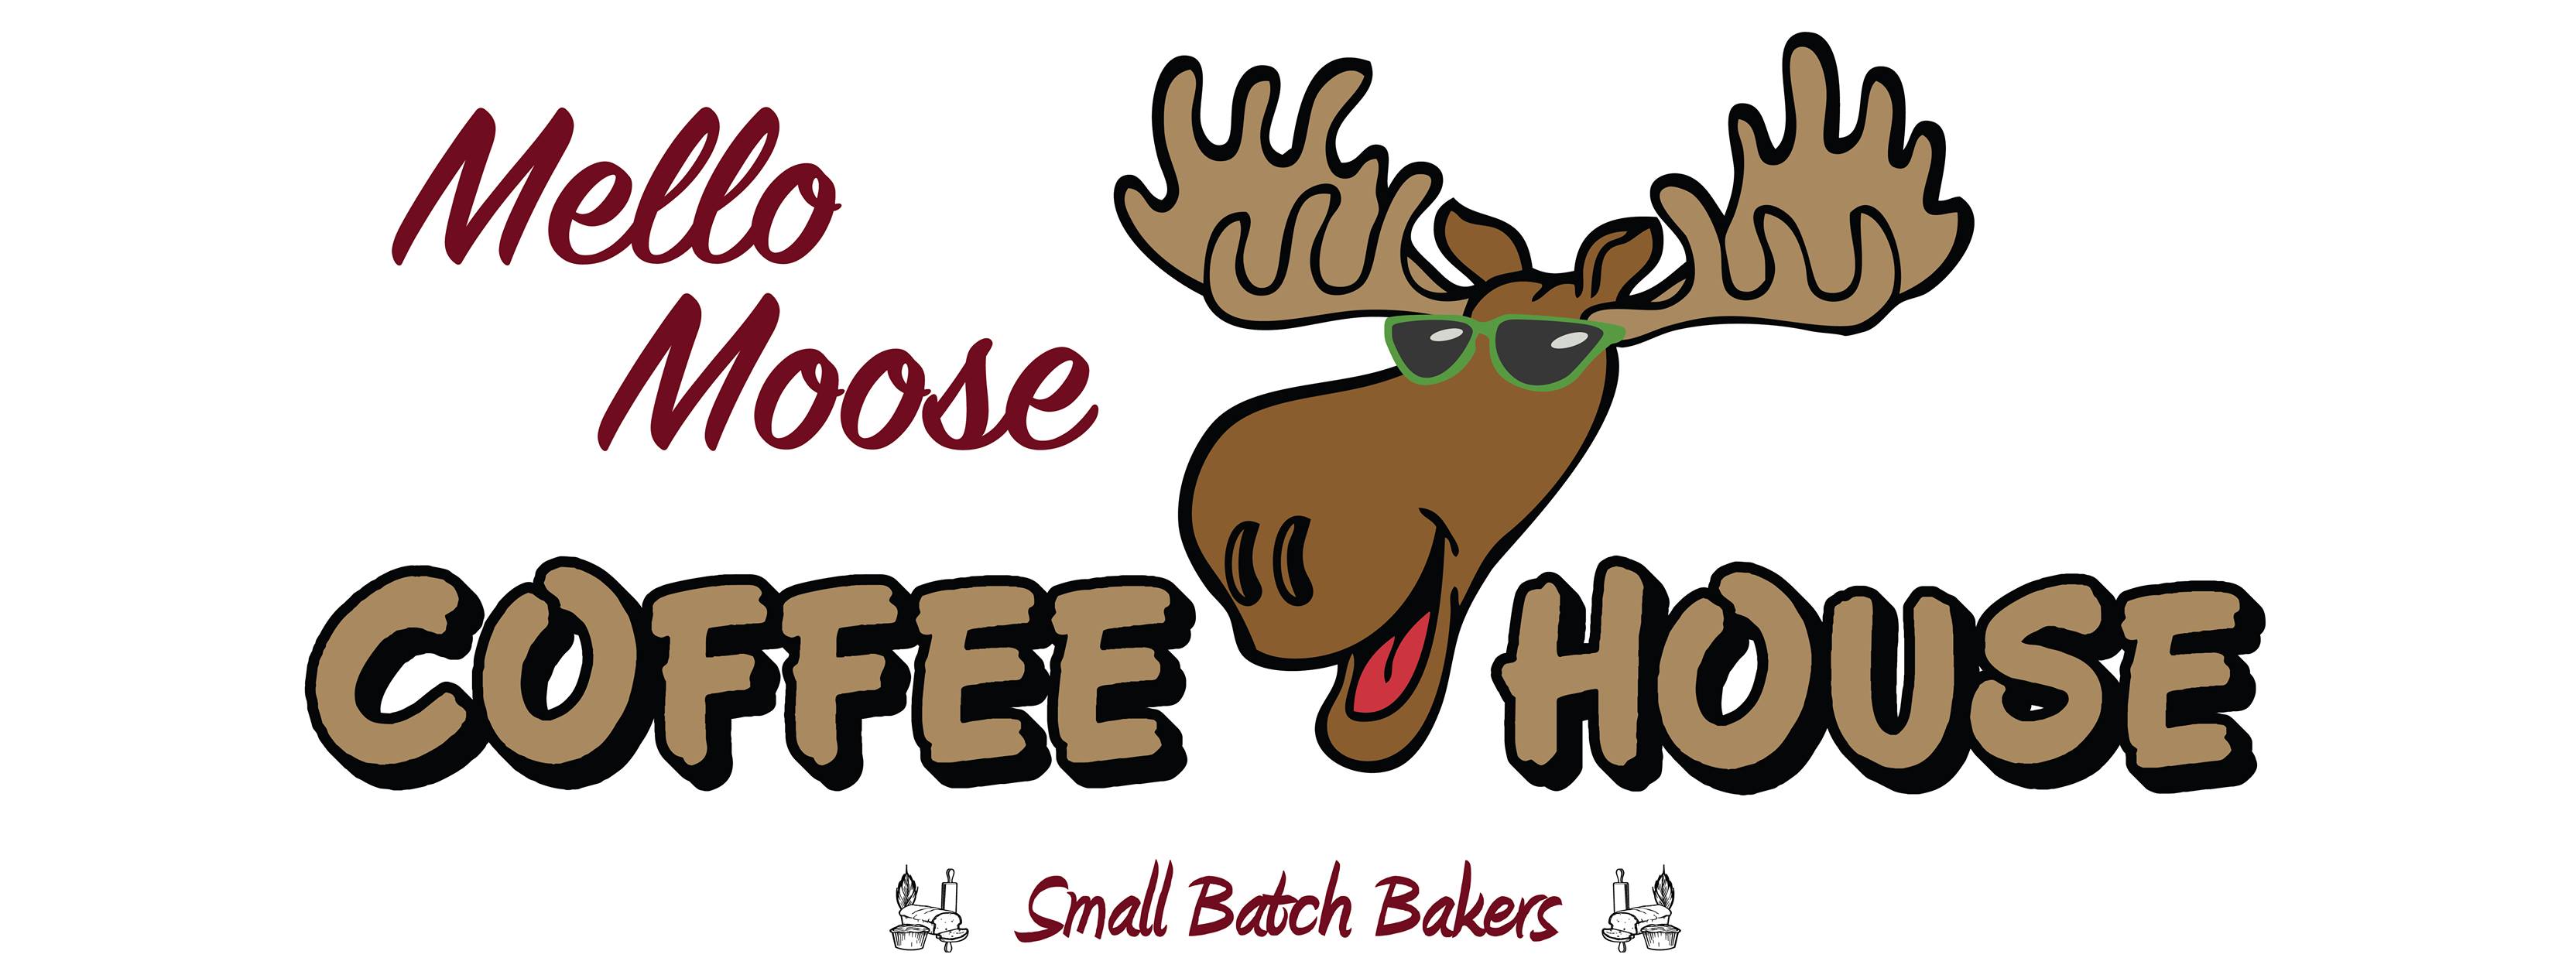 Mello Moose Coffee House 